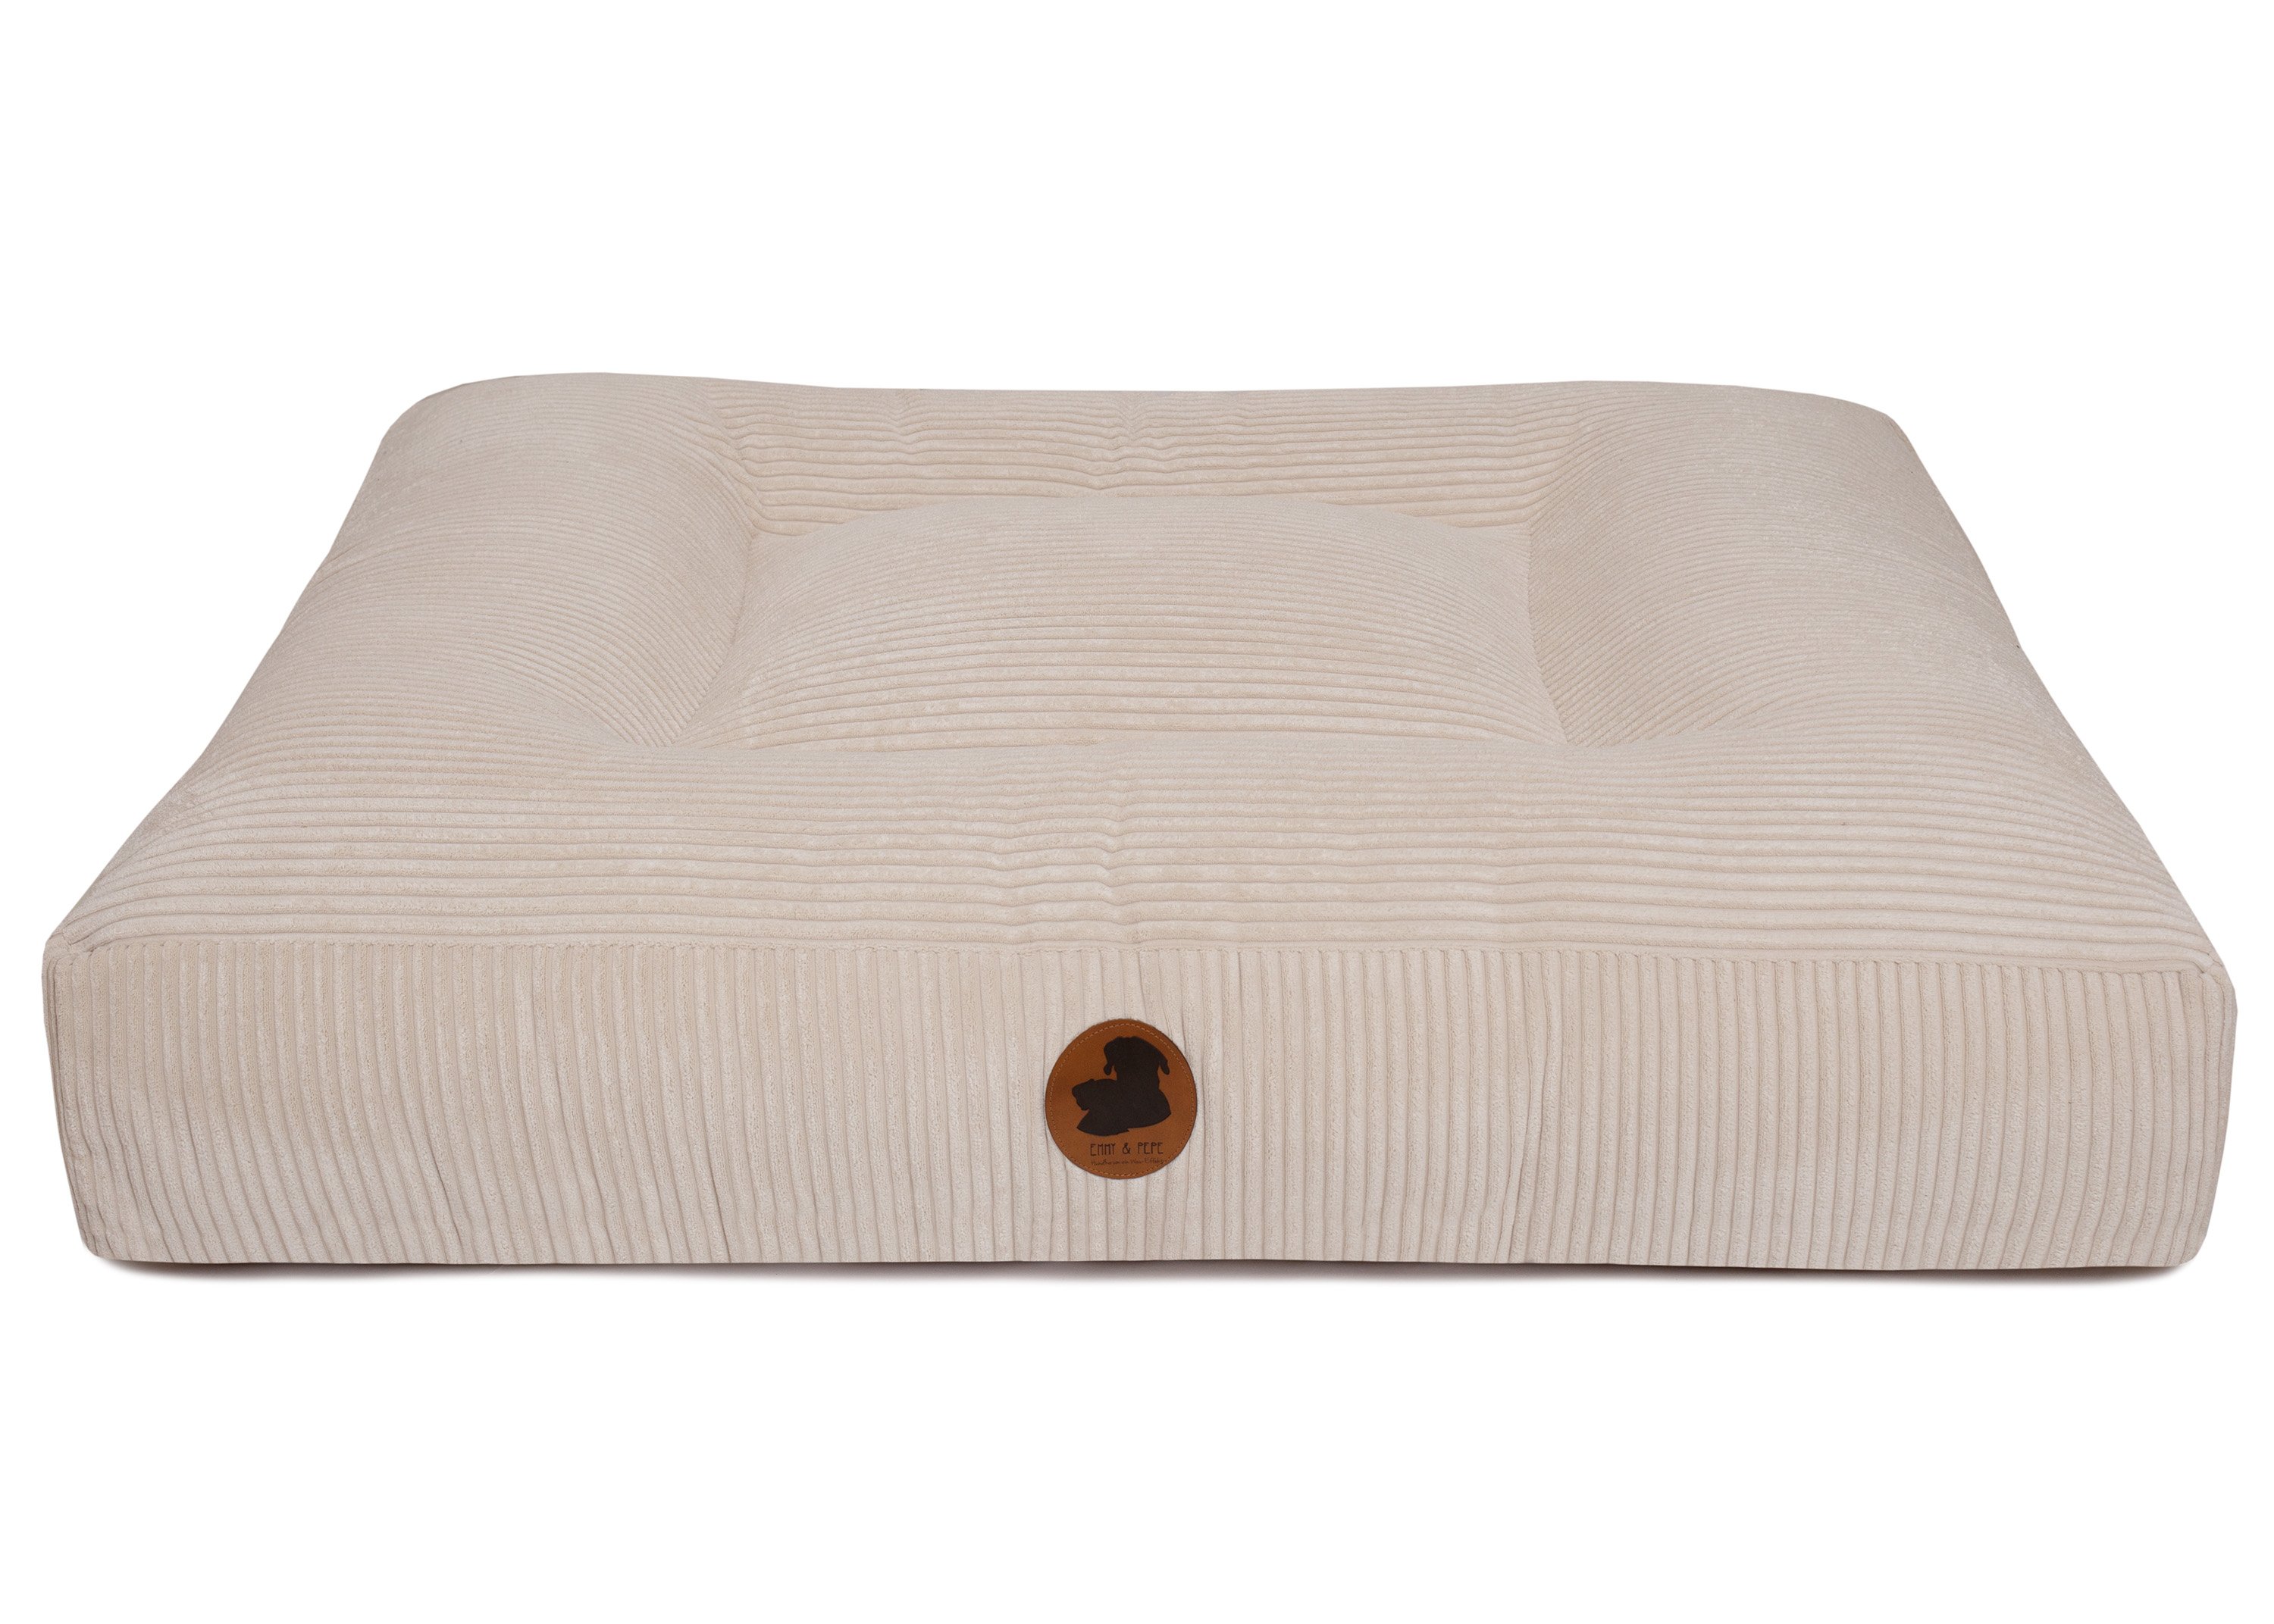 Wau-Bed Cord Cream Oval S (80x60cm)